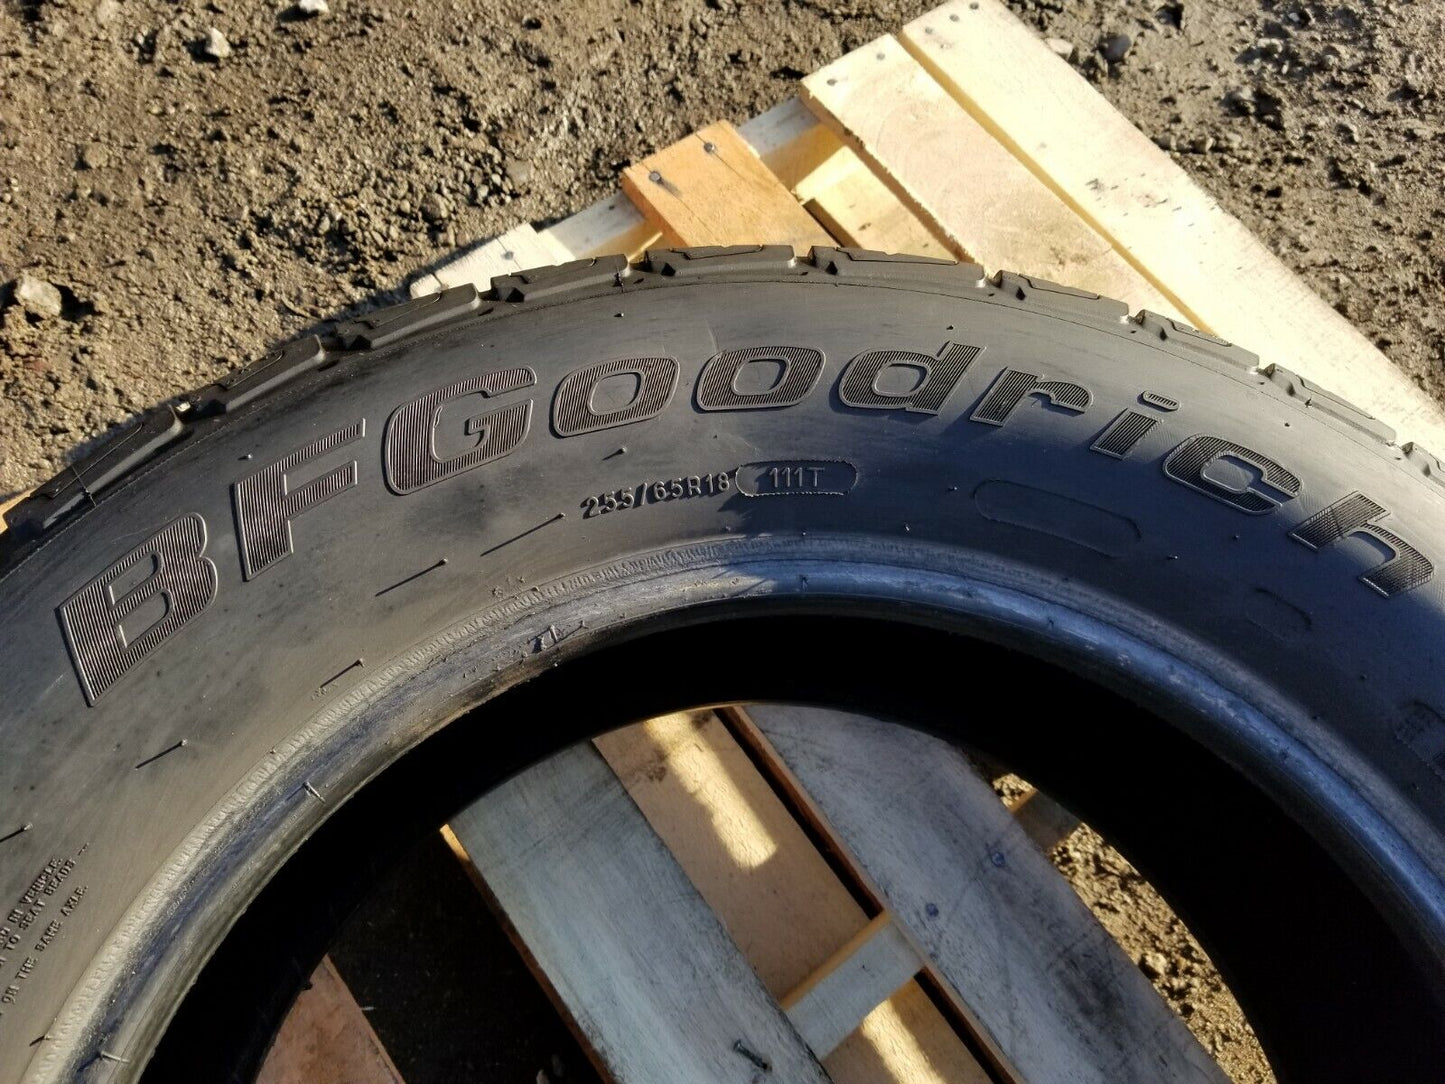 Used Tire BFGoodrich Advantage 255/65 R18 111t M+s 8.5/32